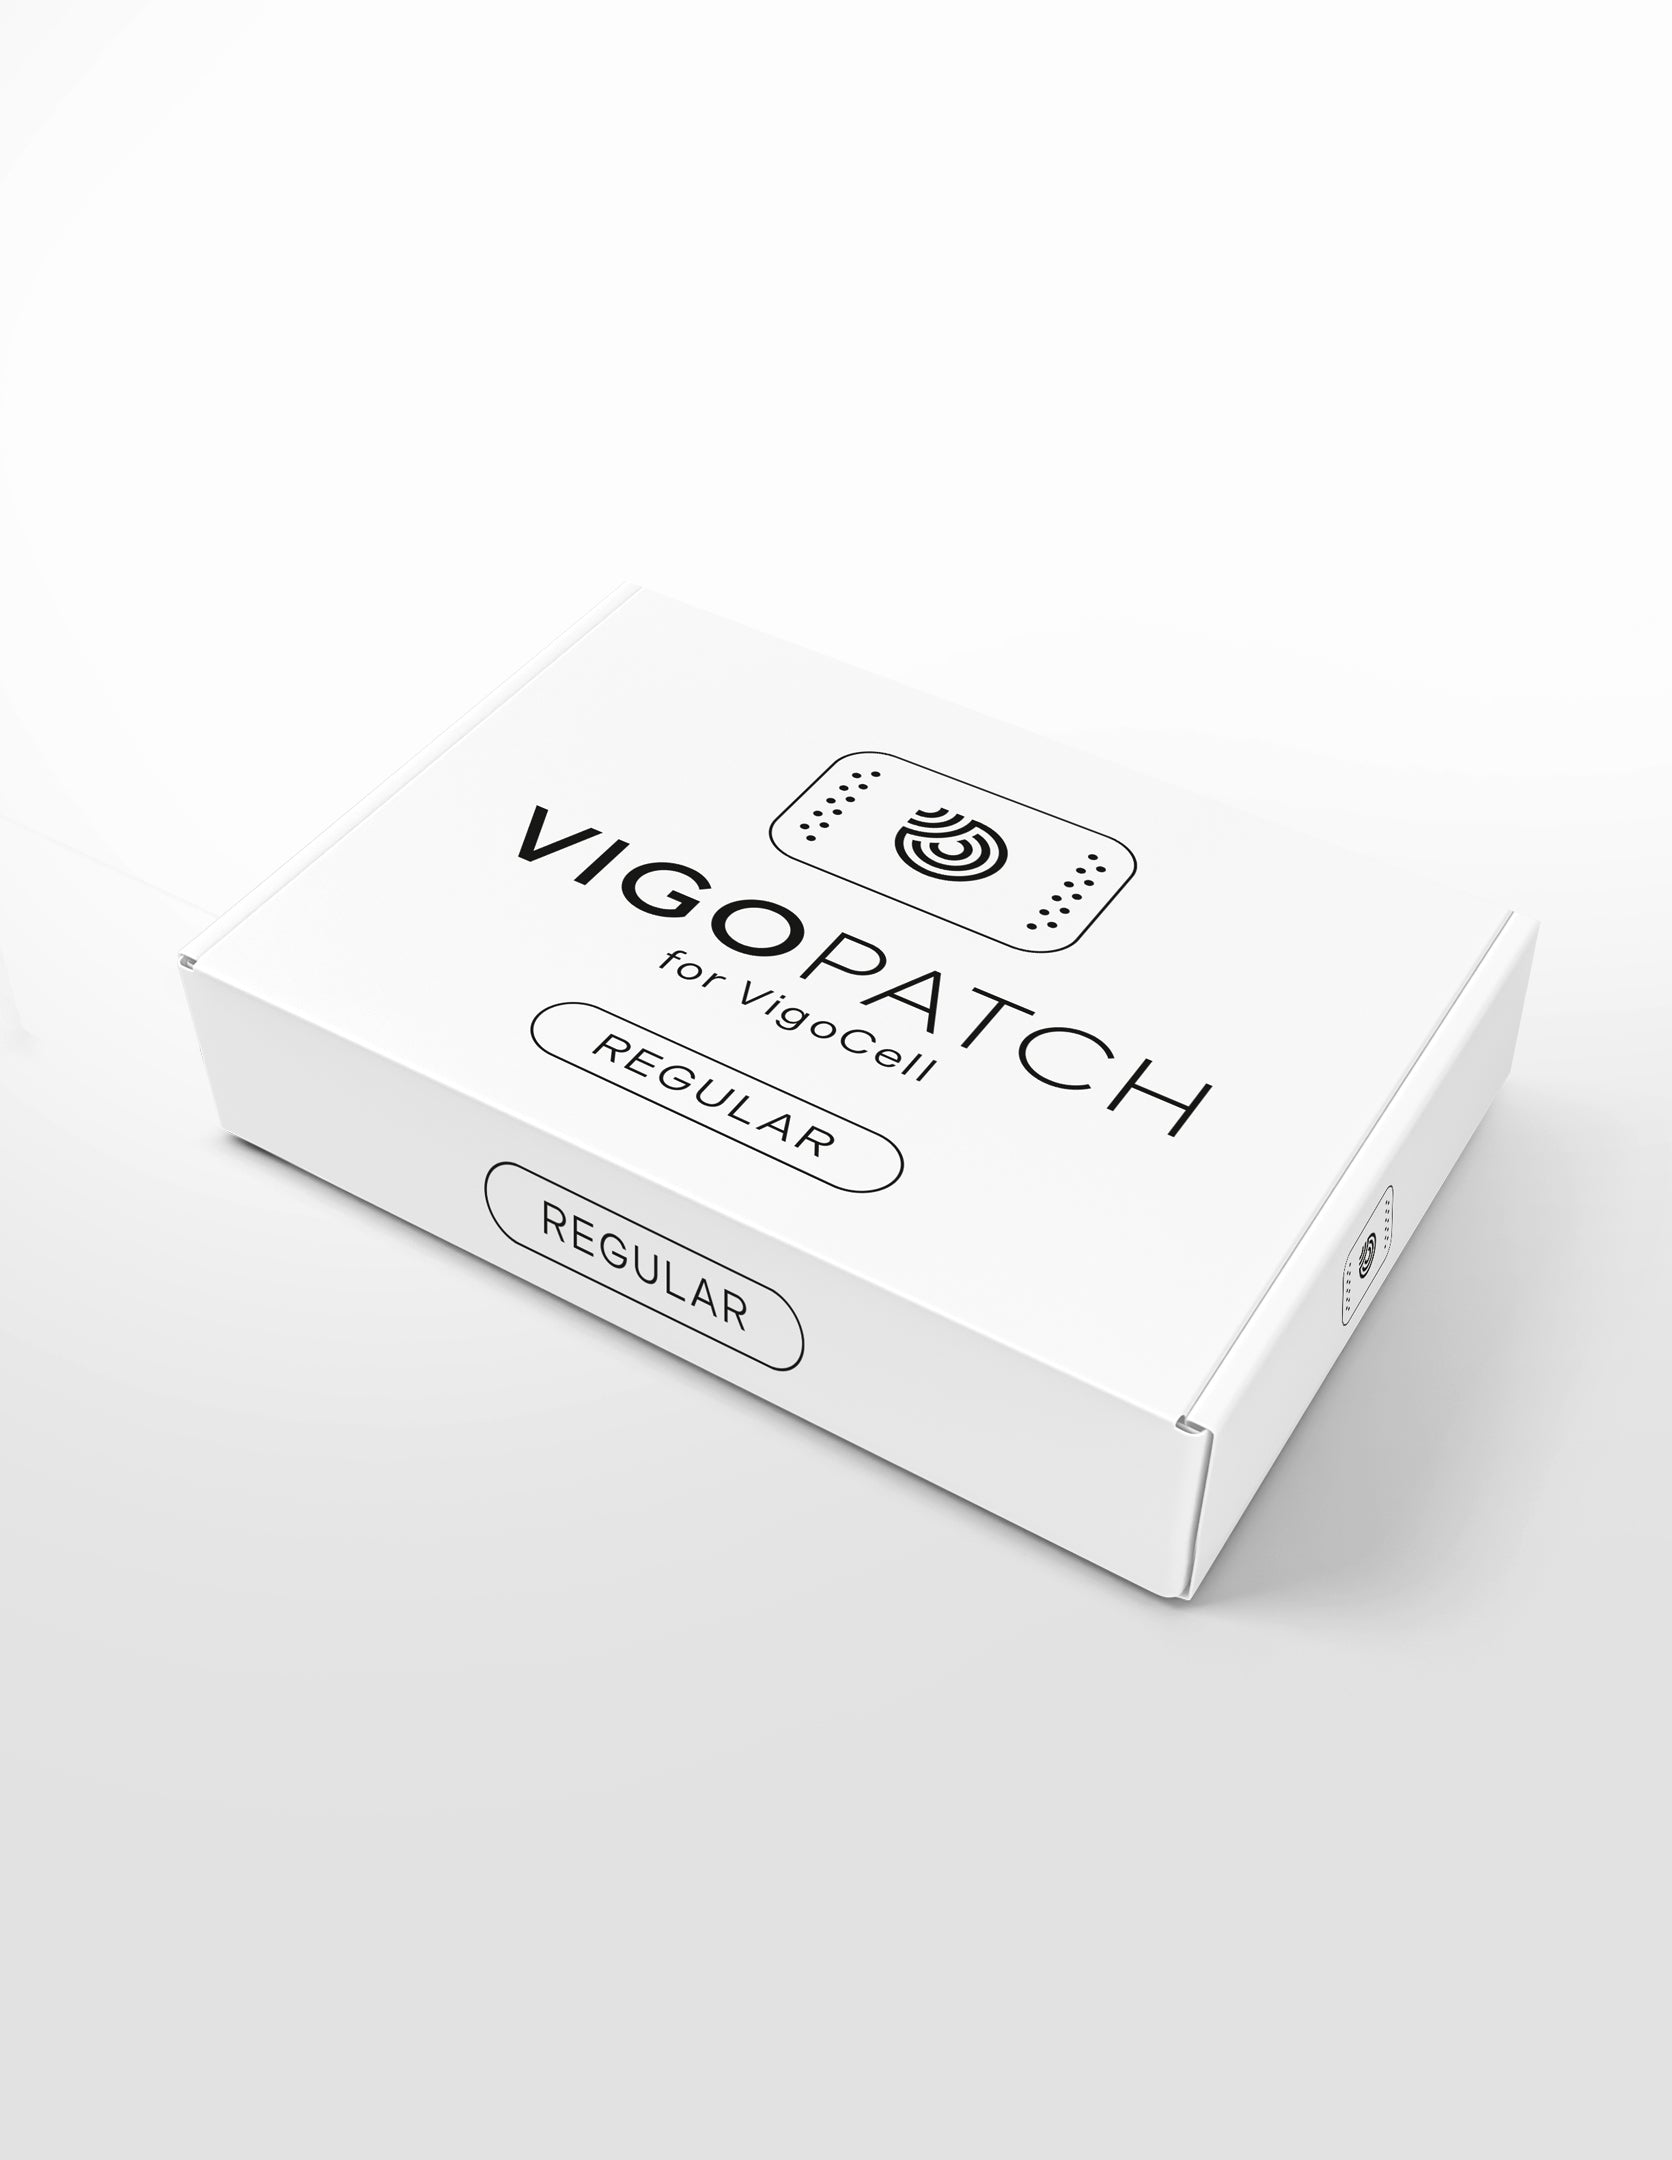 VigoPatch verpakking